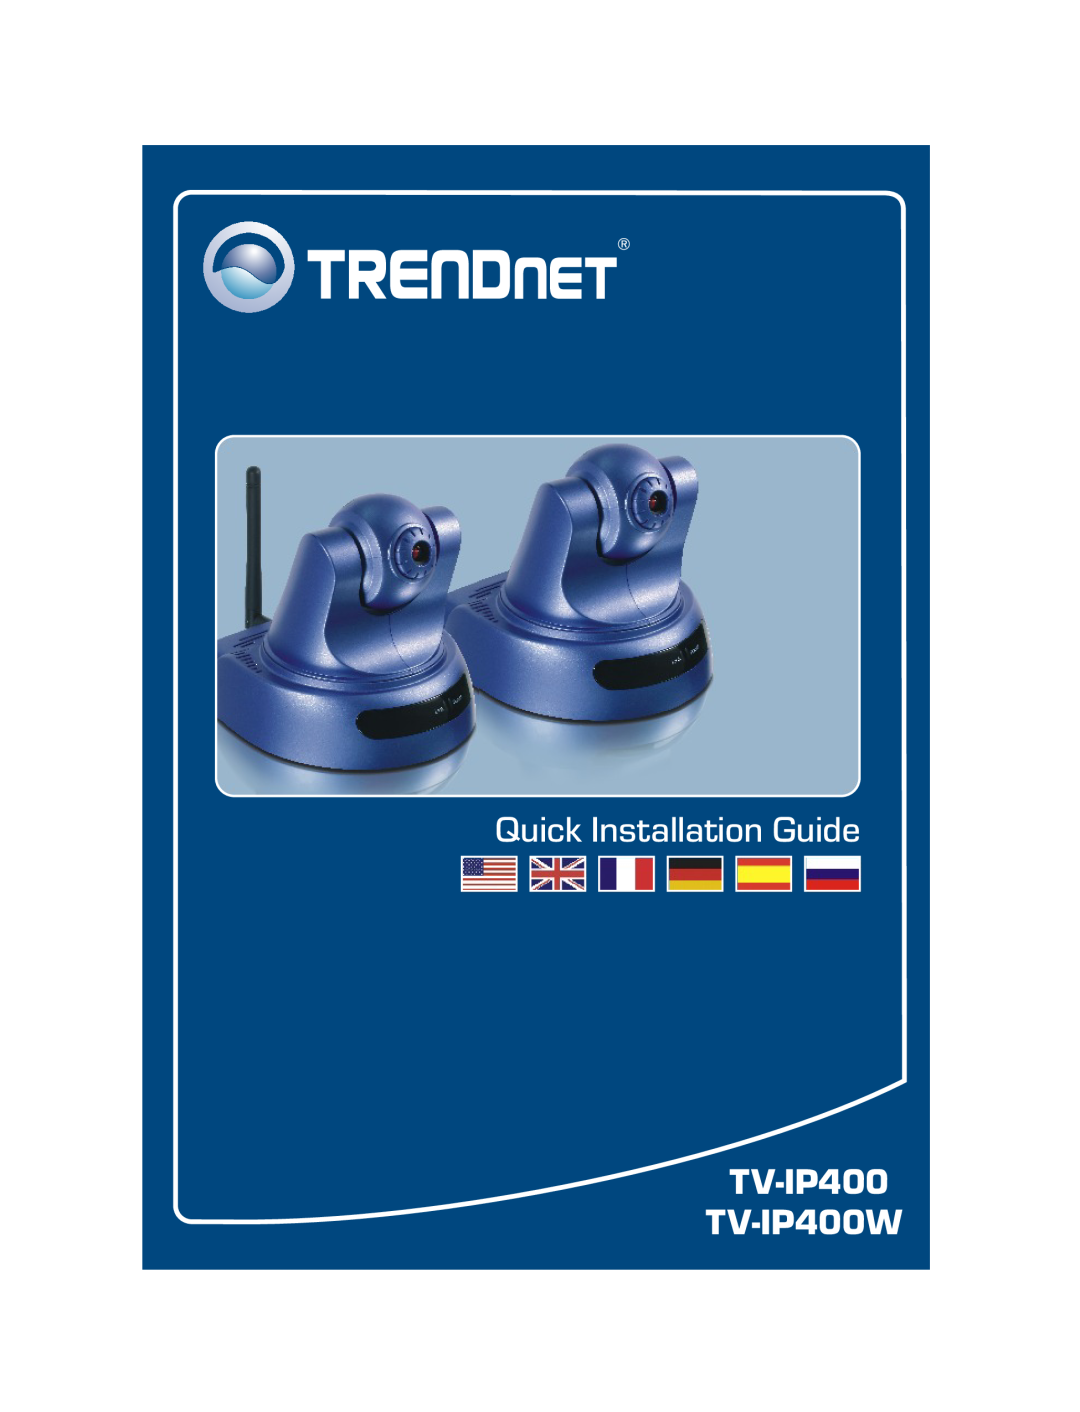 TRENDnet TRENDNET, tv-ip301w manual Quick Installation Guide, TV-IP301 TV-IP301W 